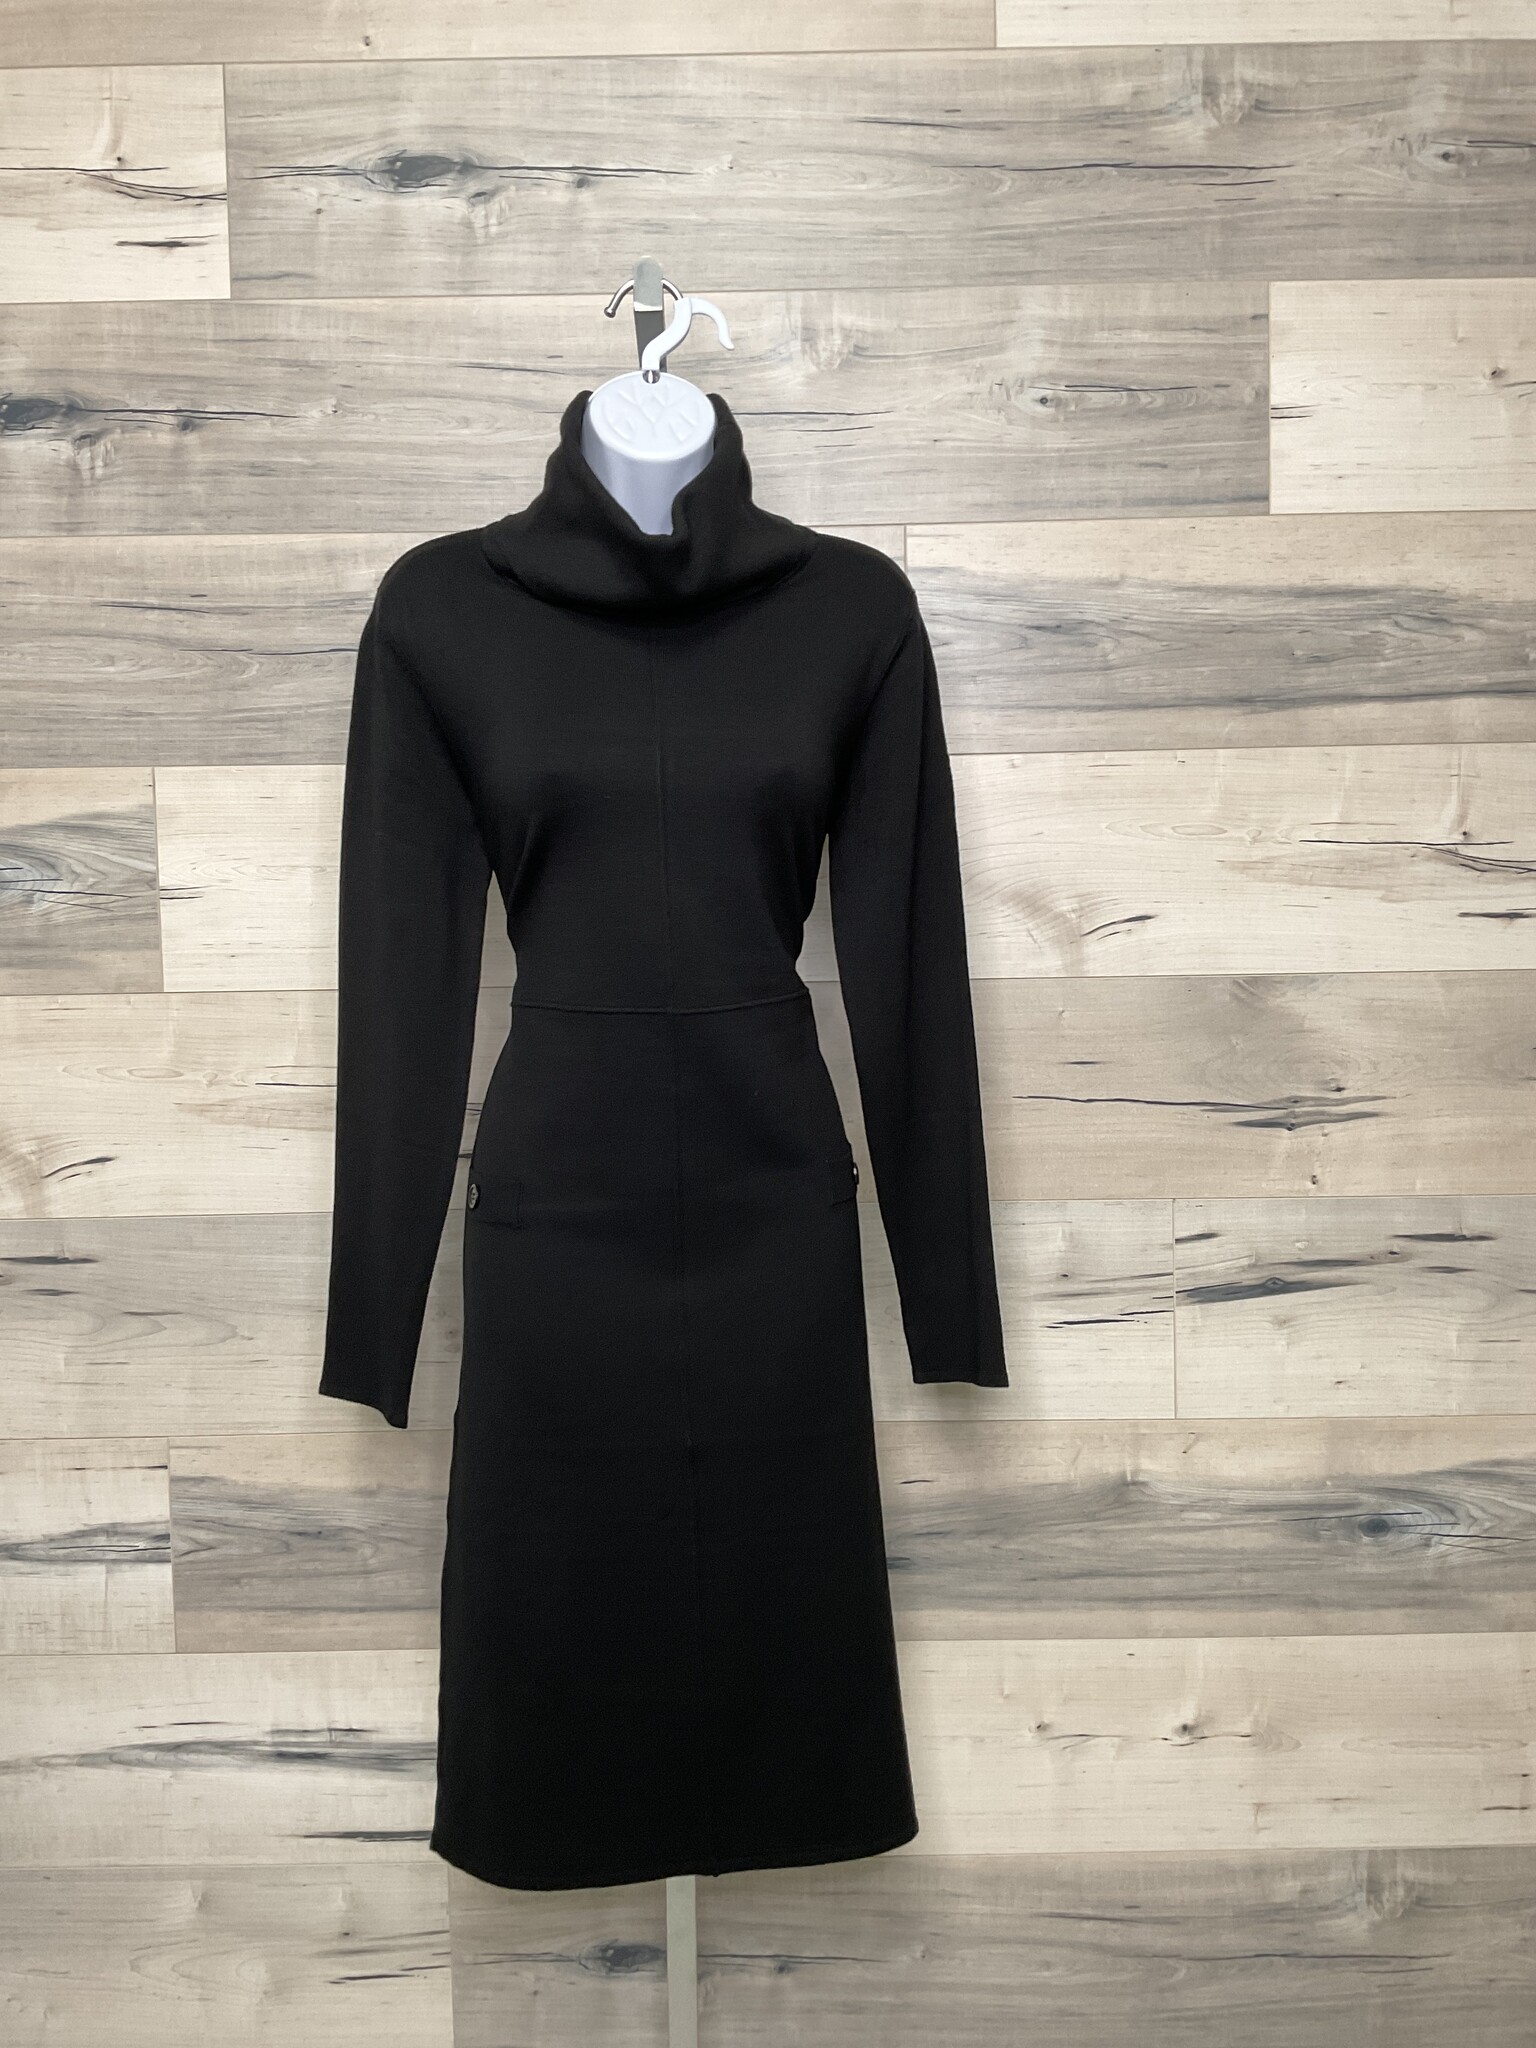 Cowl Neck Sweater Dress - Black